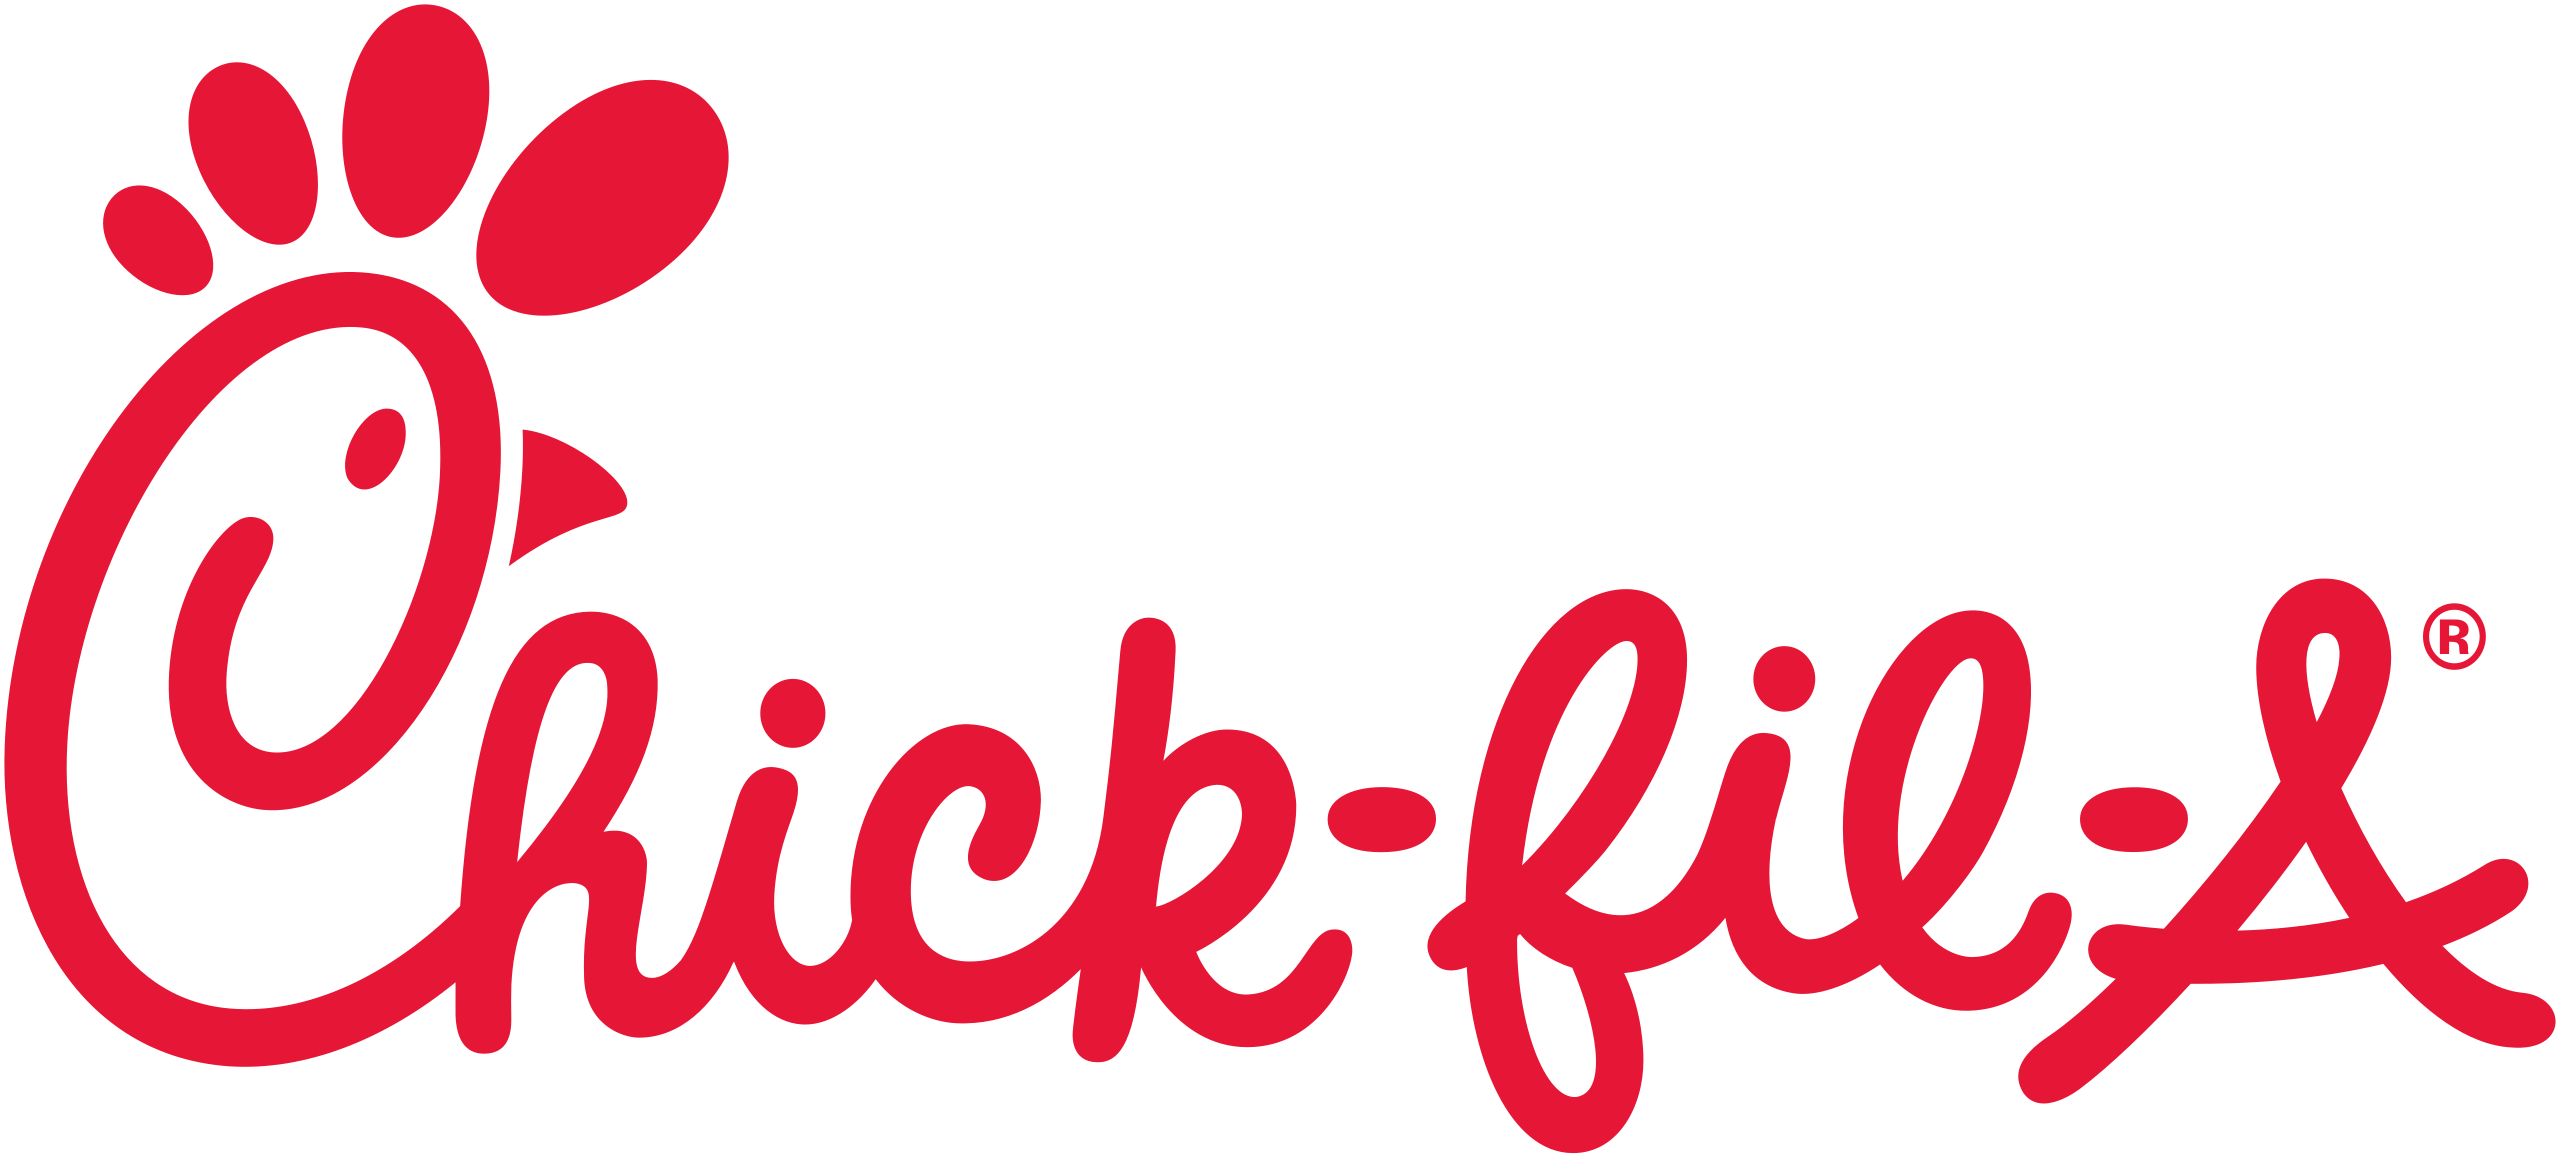 Chick Fil A Full Logo